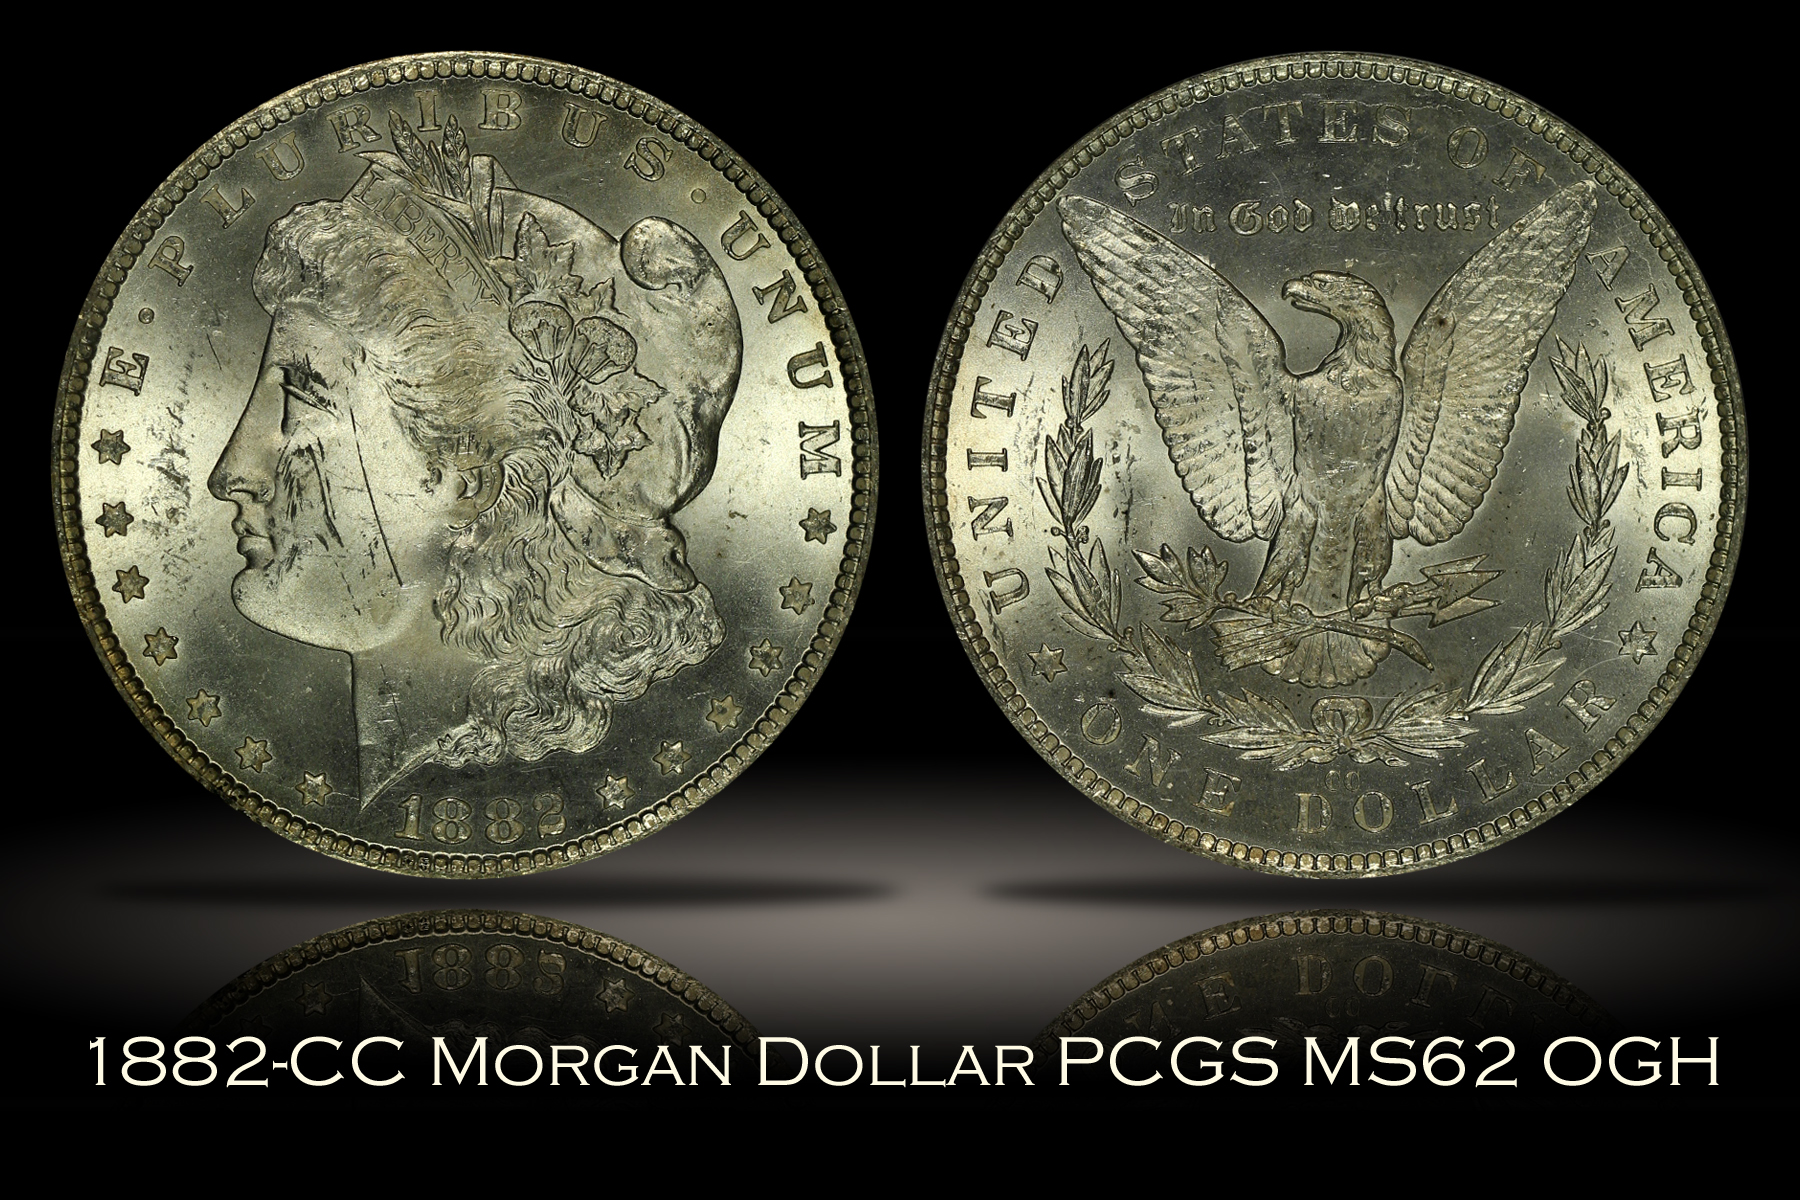 Michael Kittle Rare Coins - 1882-CC Morgan Dollar PCGS MS62 OGH